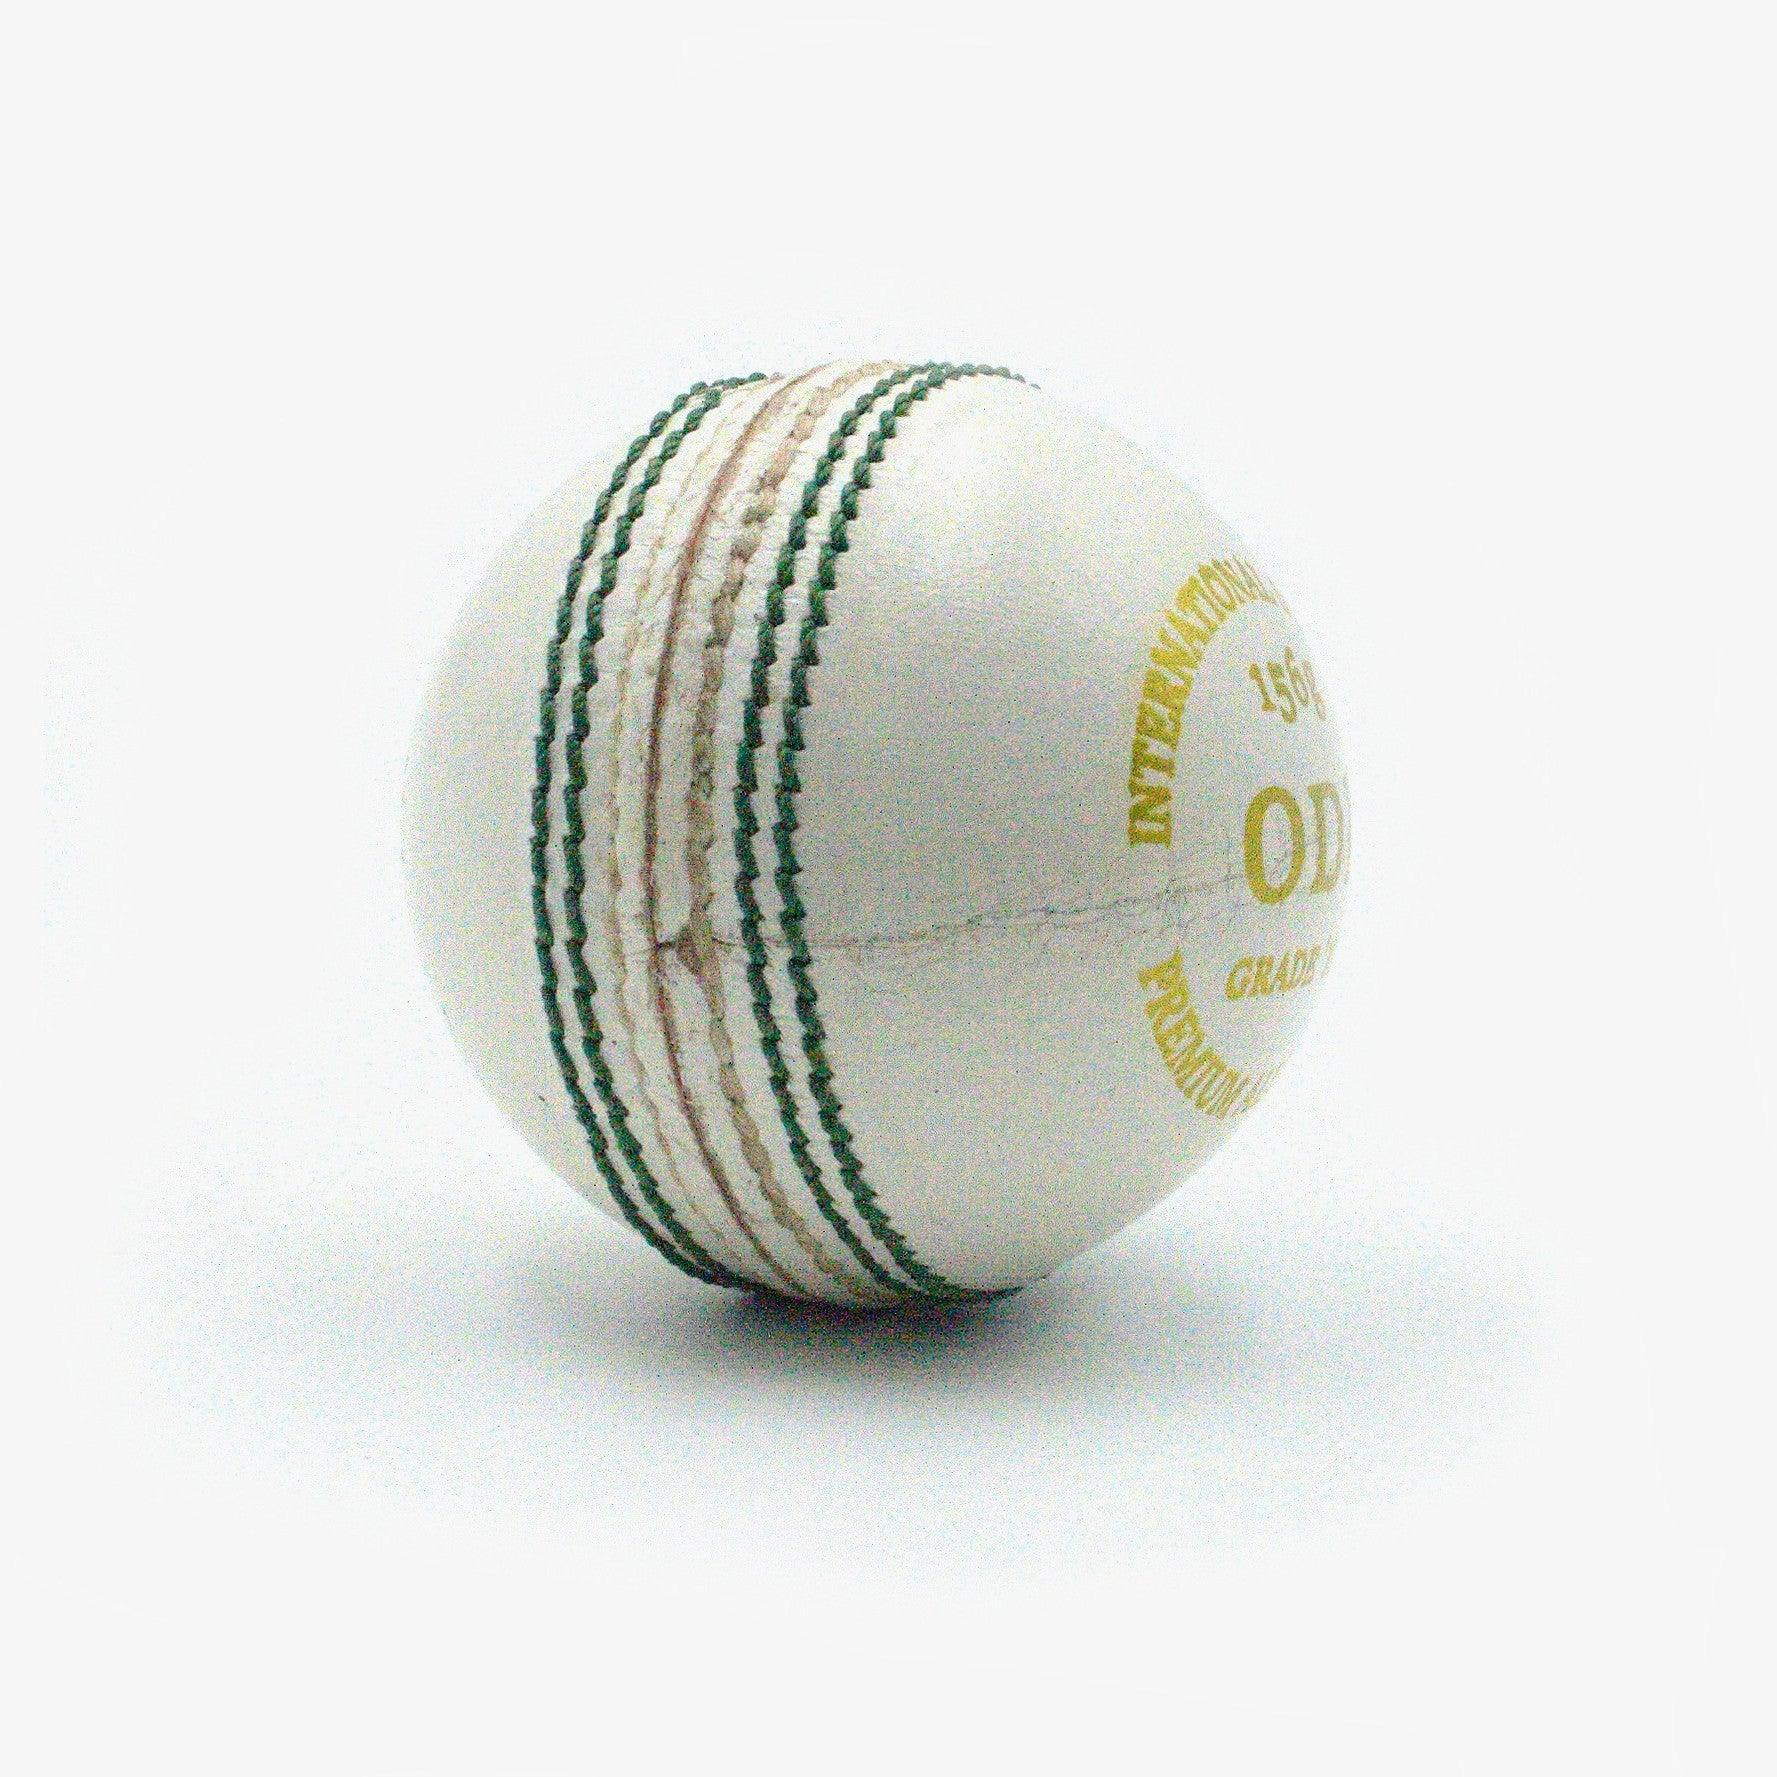 AT ODI WHITE 4pce 156g Cricket Ball - AT Sports